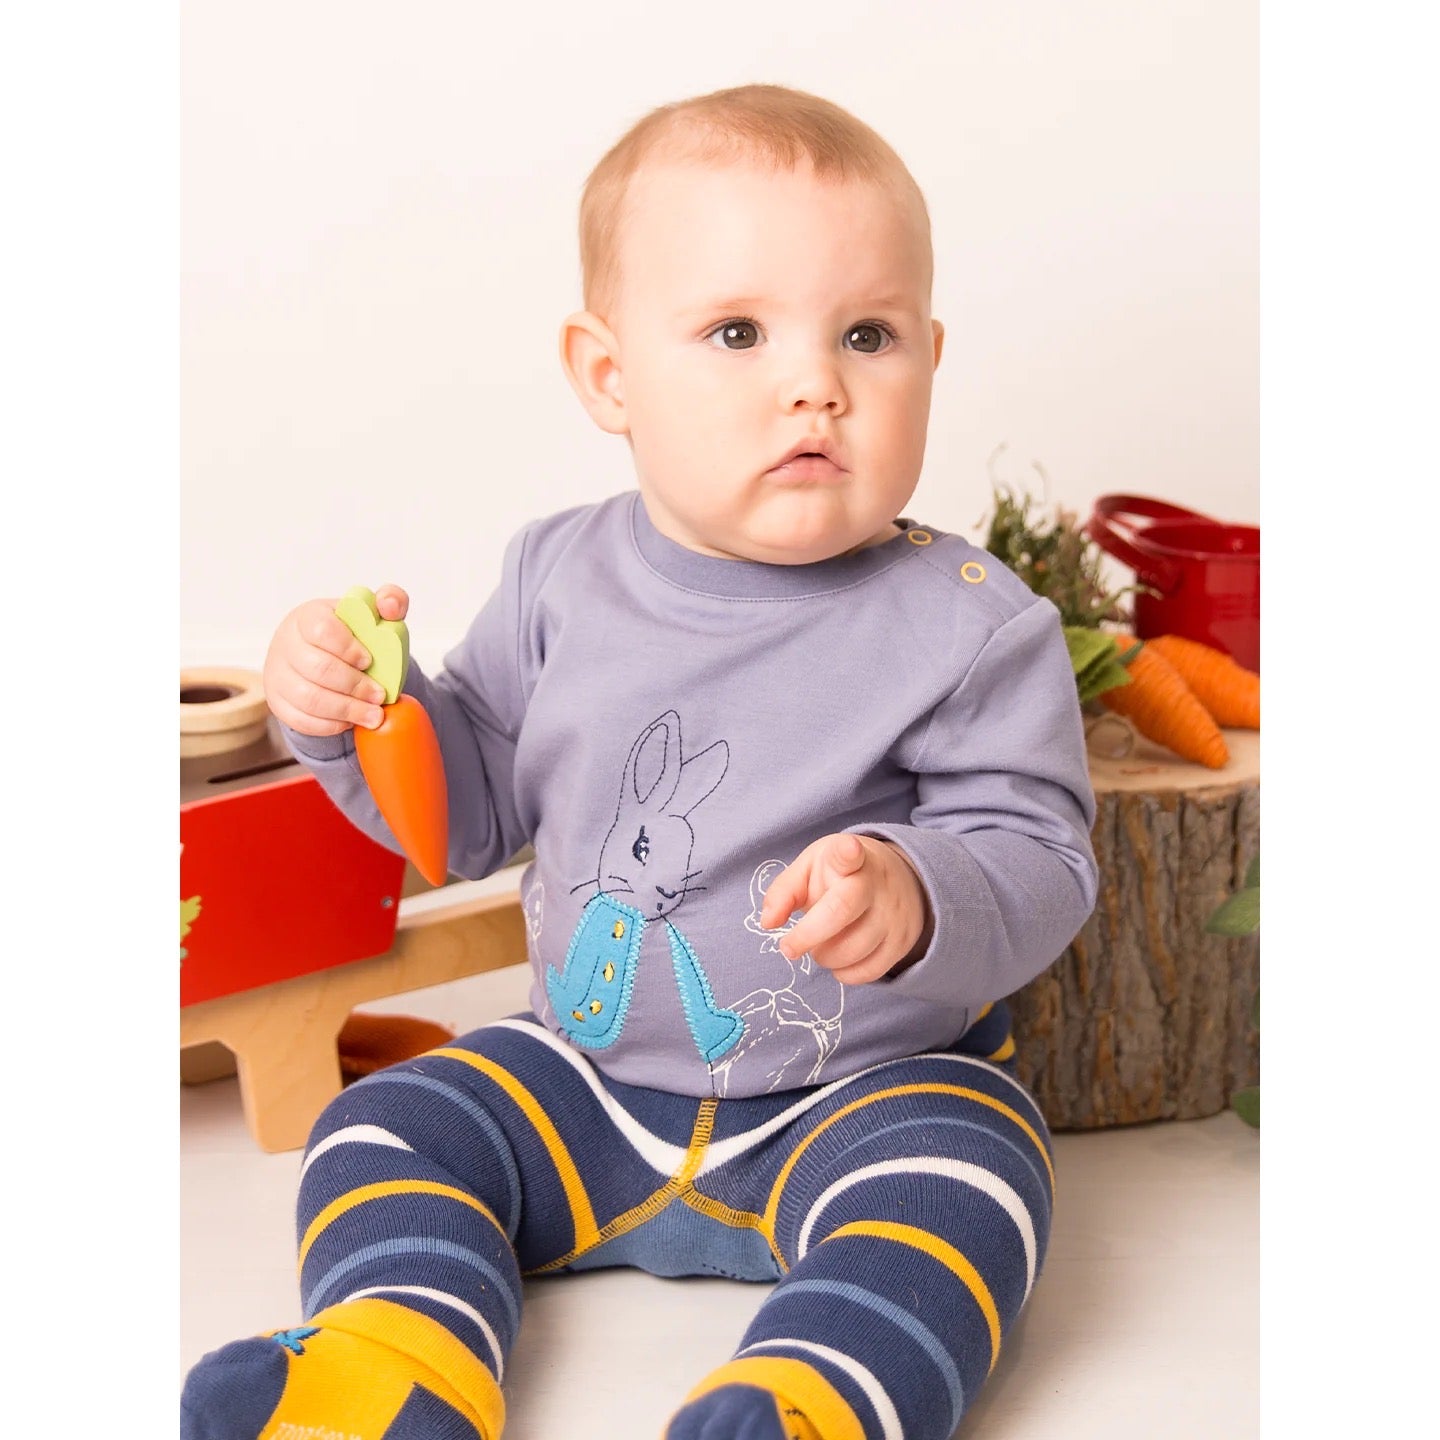 Blade & Rose Peter Rabbit Modern Mix Infant T-Shirt Clothing 0-6M / Blue,6-12M / Blue,12-24M / Blue